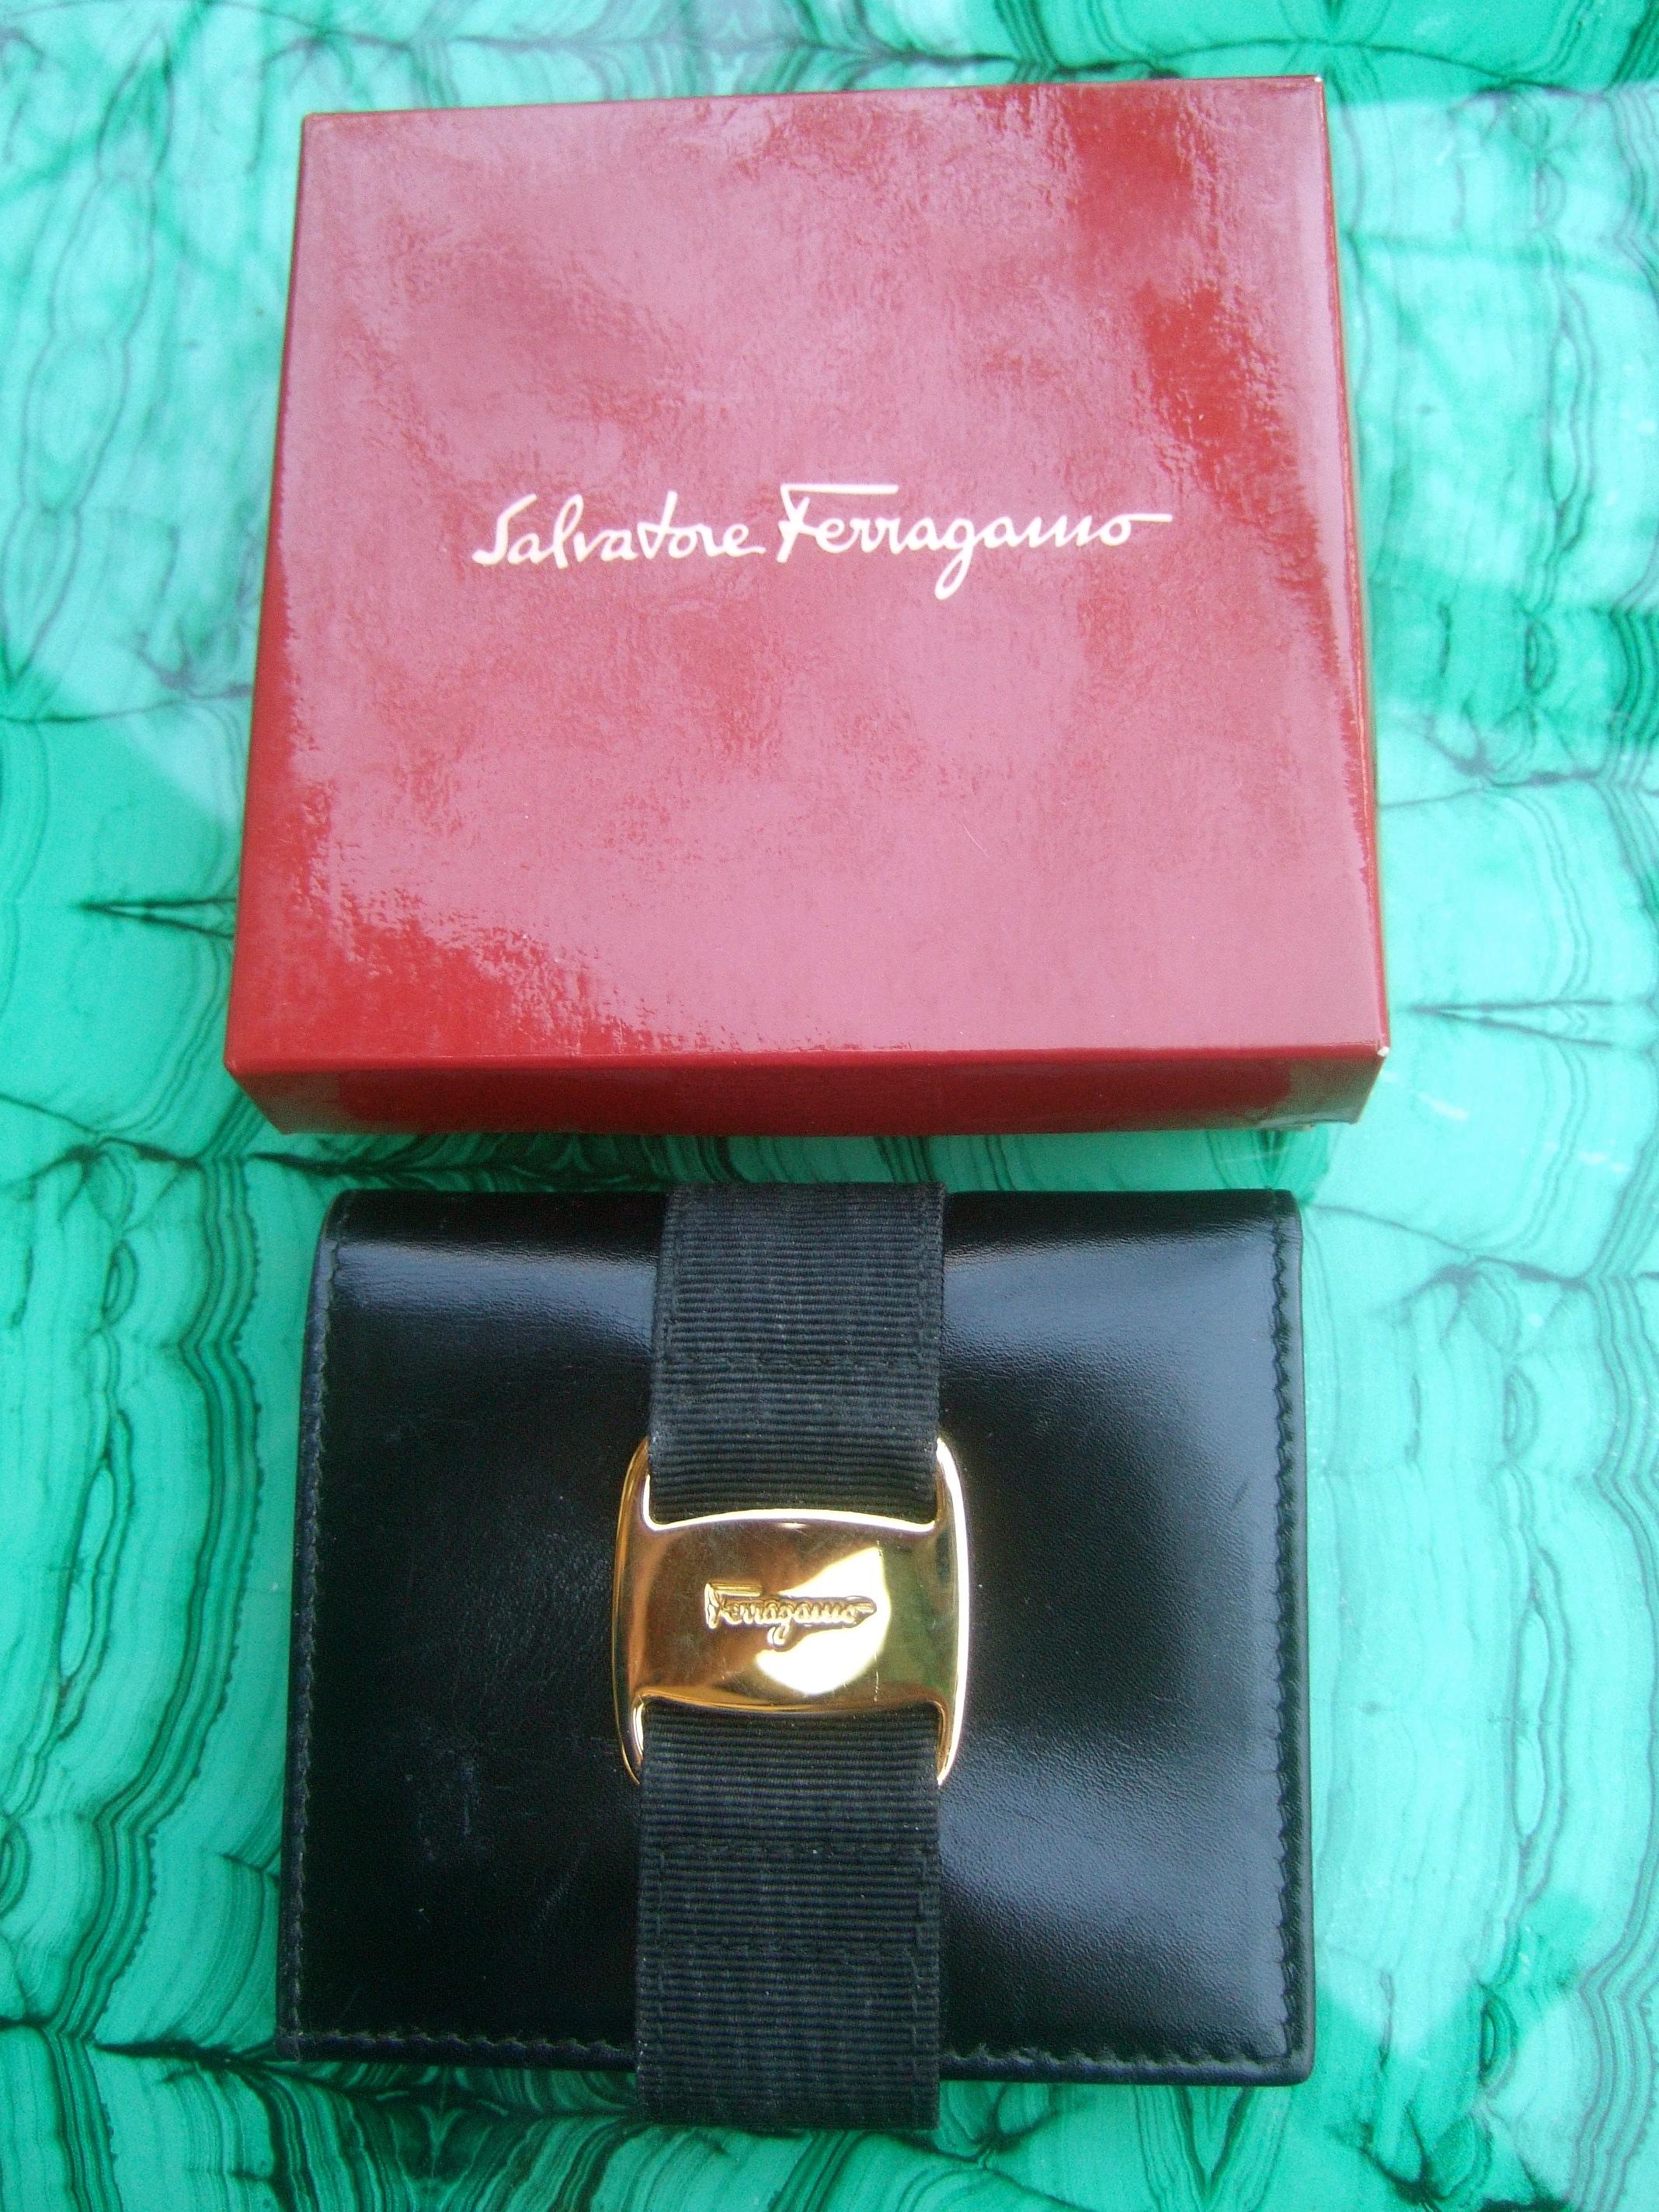 Salvatore Ferragamo Italy Black Leather Ribbon Trim Wallet in Box c 1990s 1